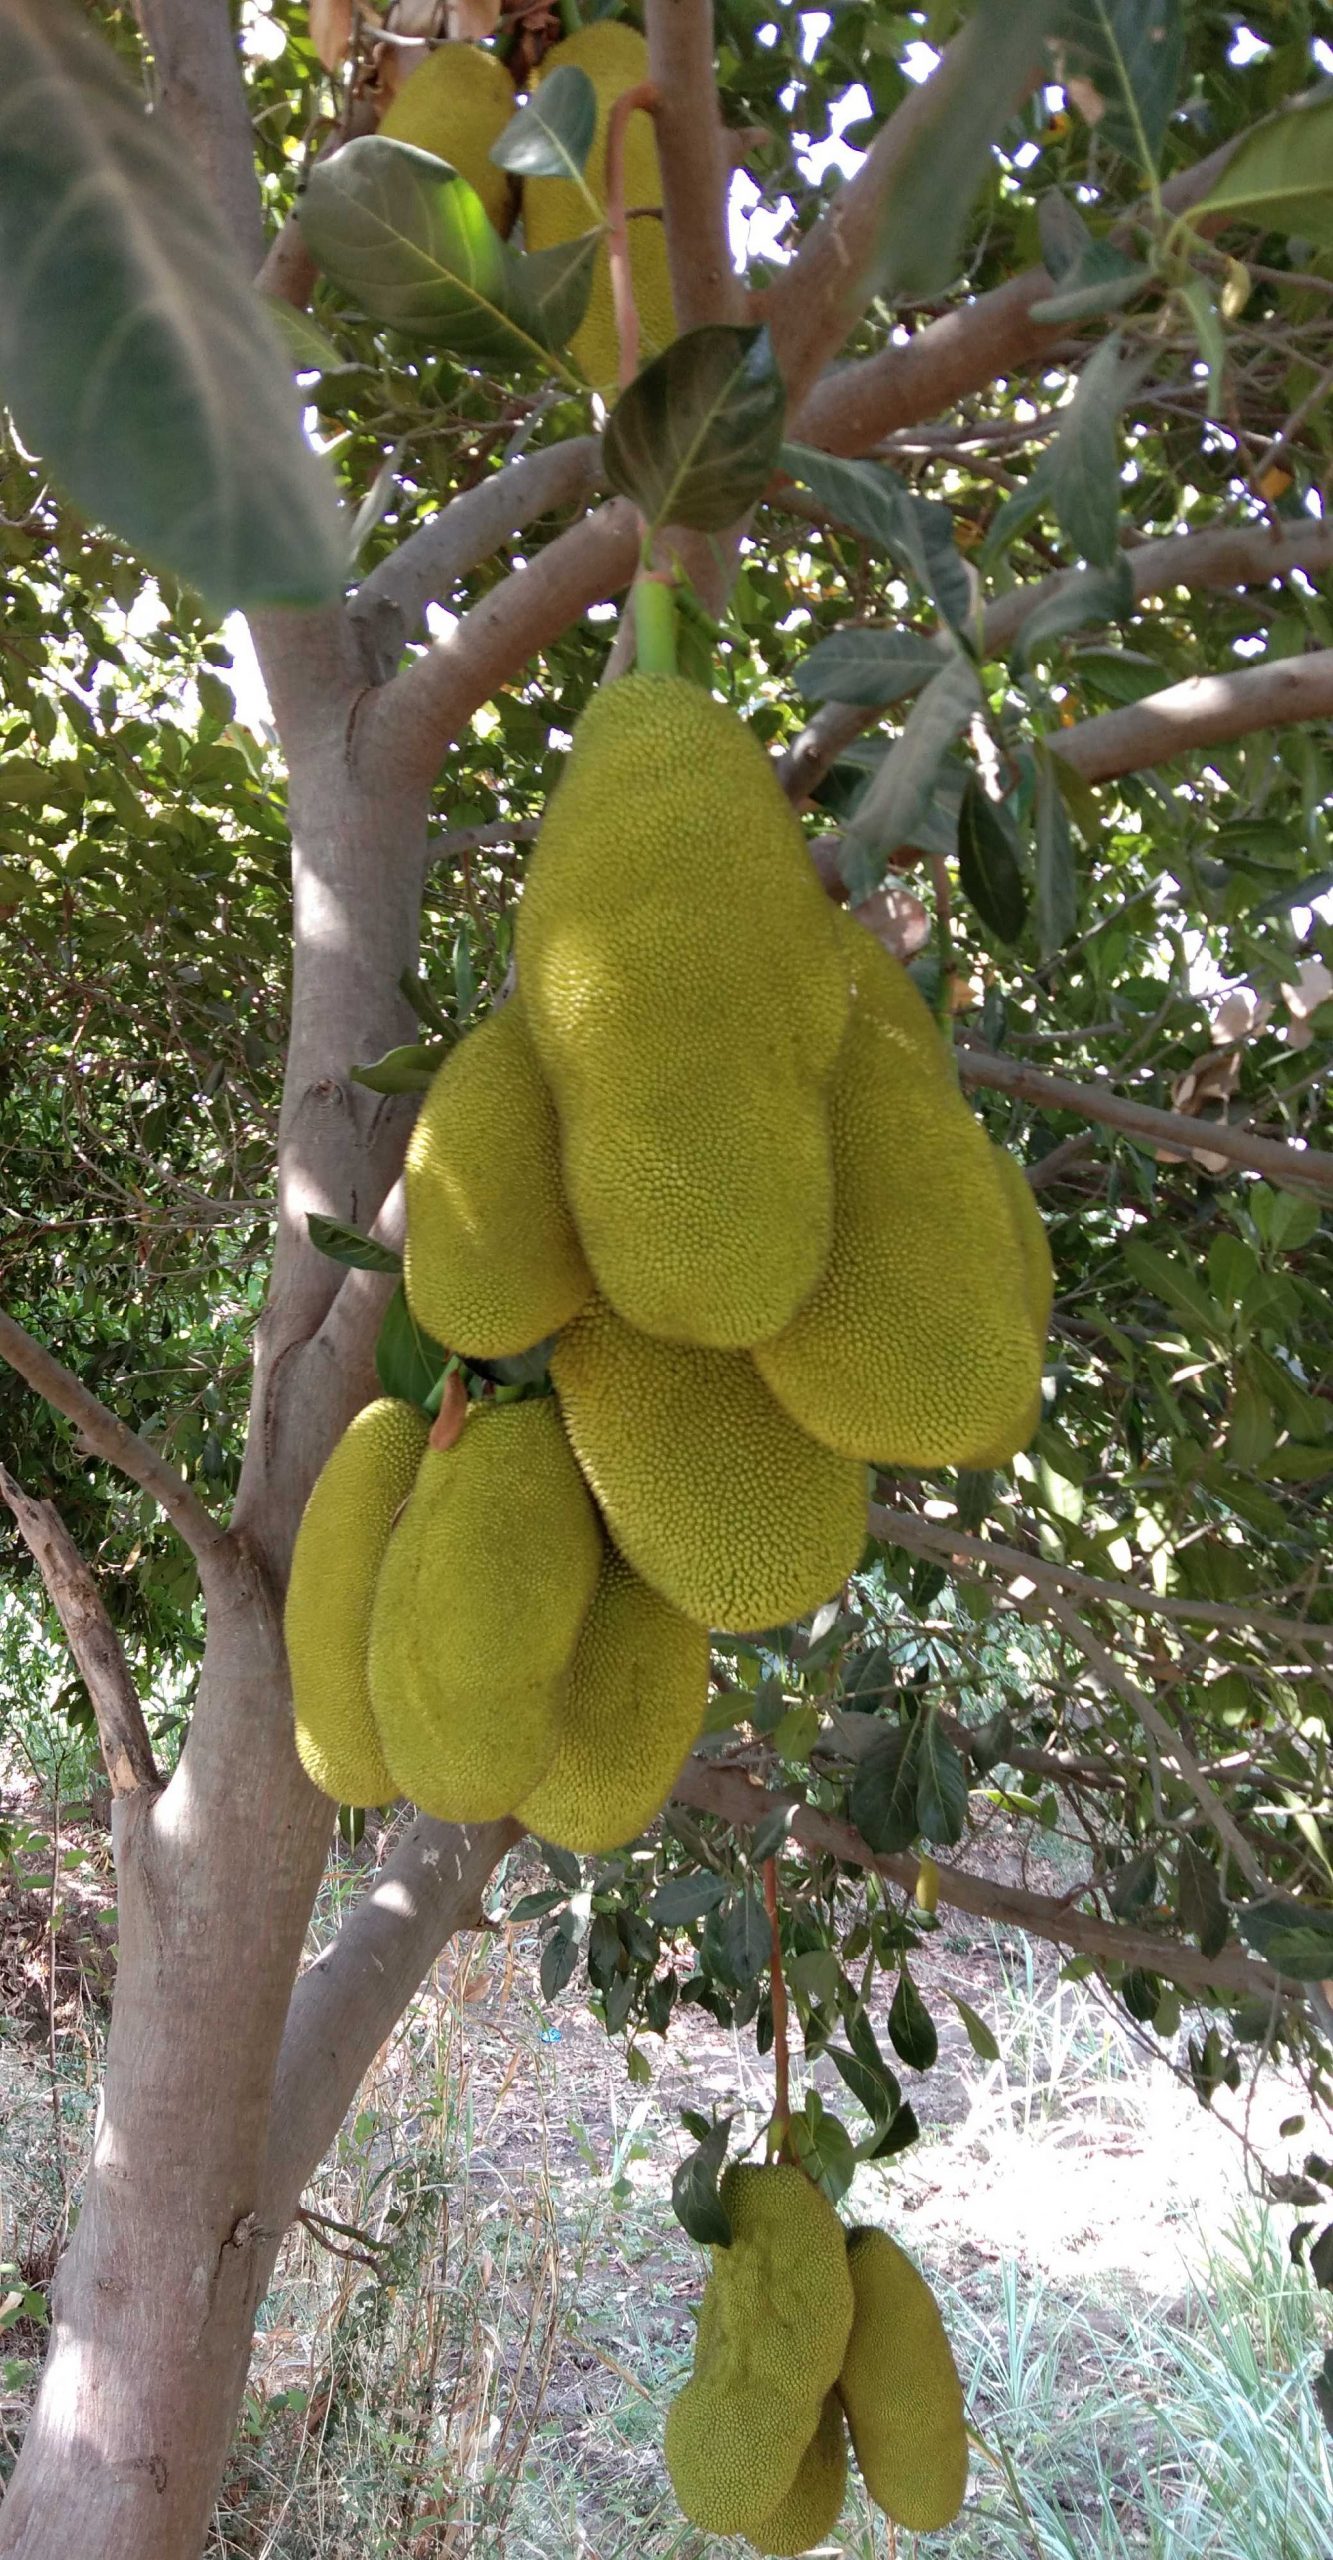 A jackfruit tree